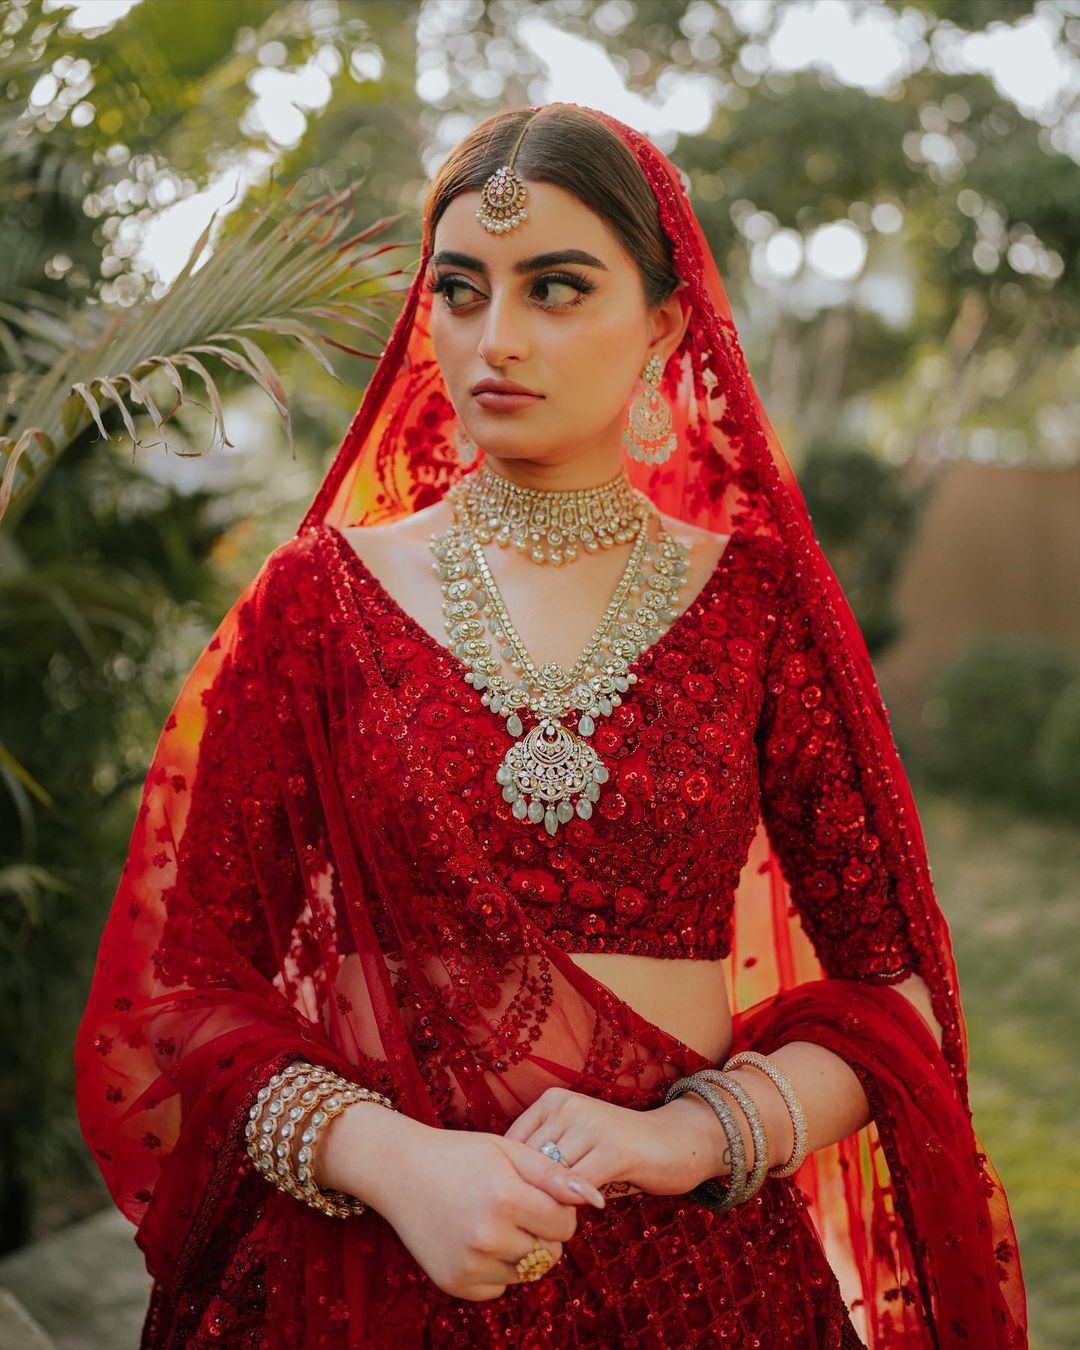 The bride Katrina Kaif @katrinakaif chose a traditional Indian red bridal  look. She wears a classic Sabyasachi red bridal lehenga in hand... |  Instagram